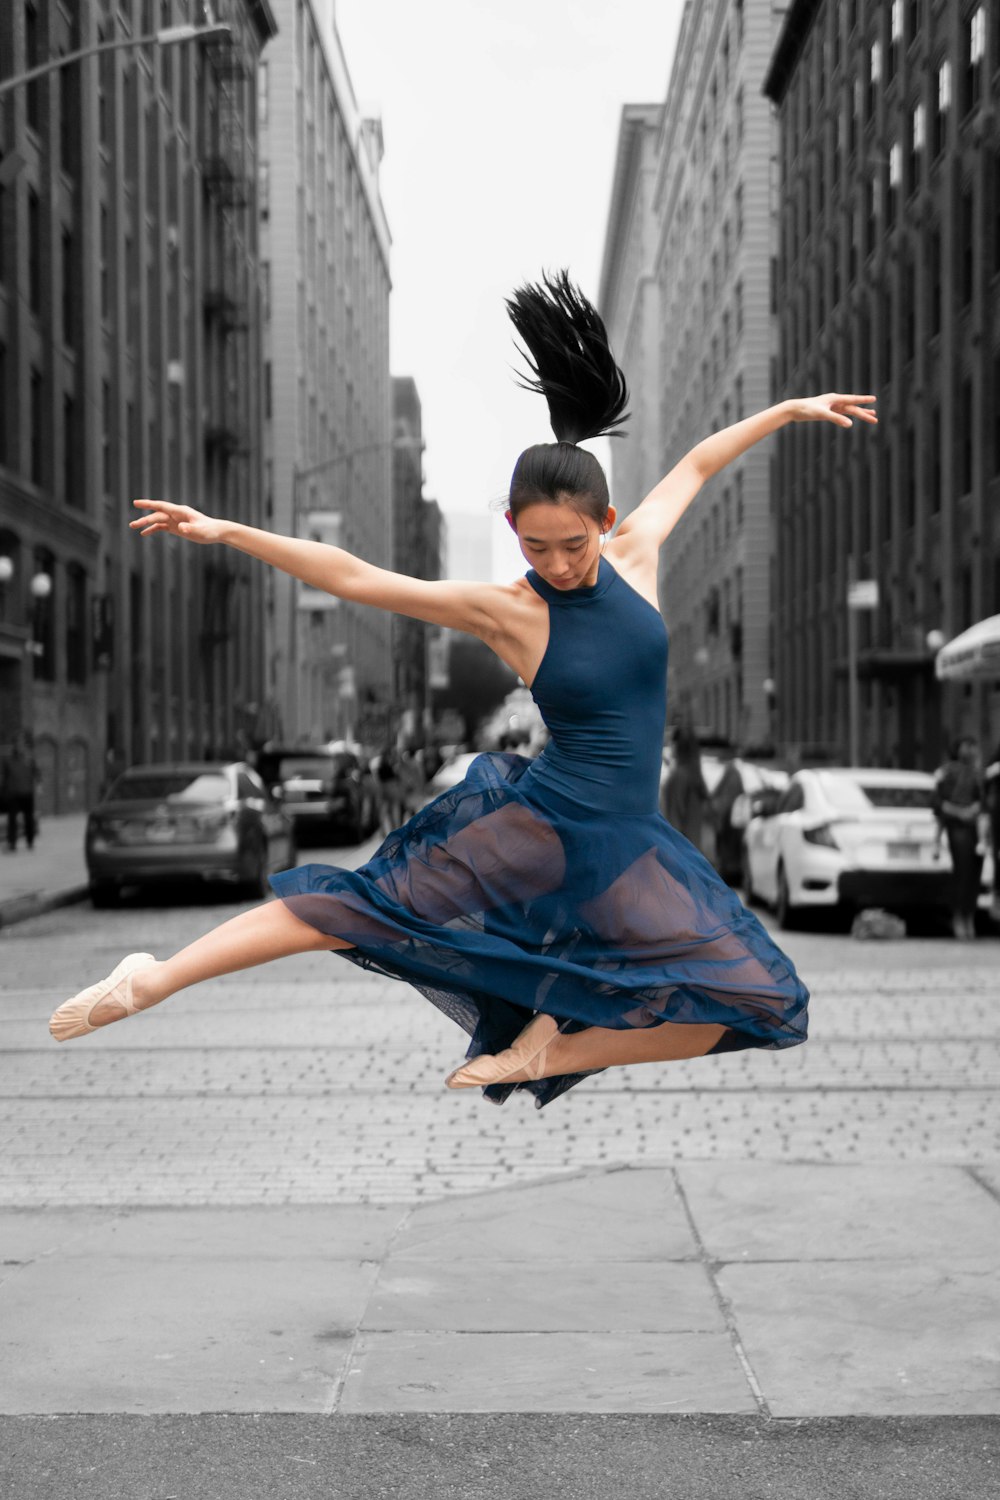 springende Ballerina trägt tagsüber blaues Kleid